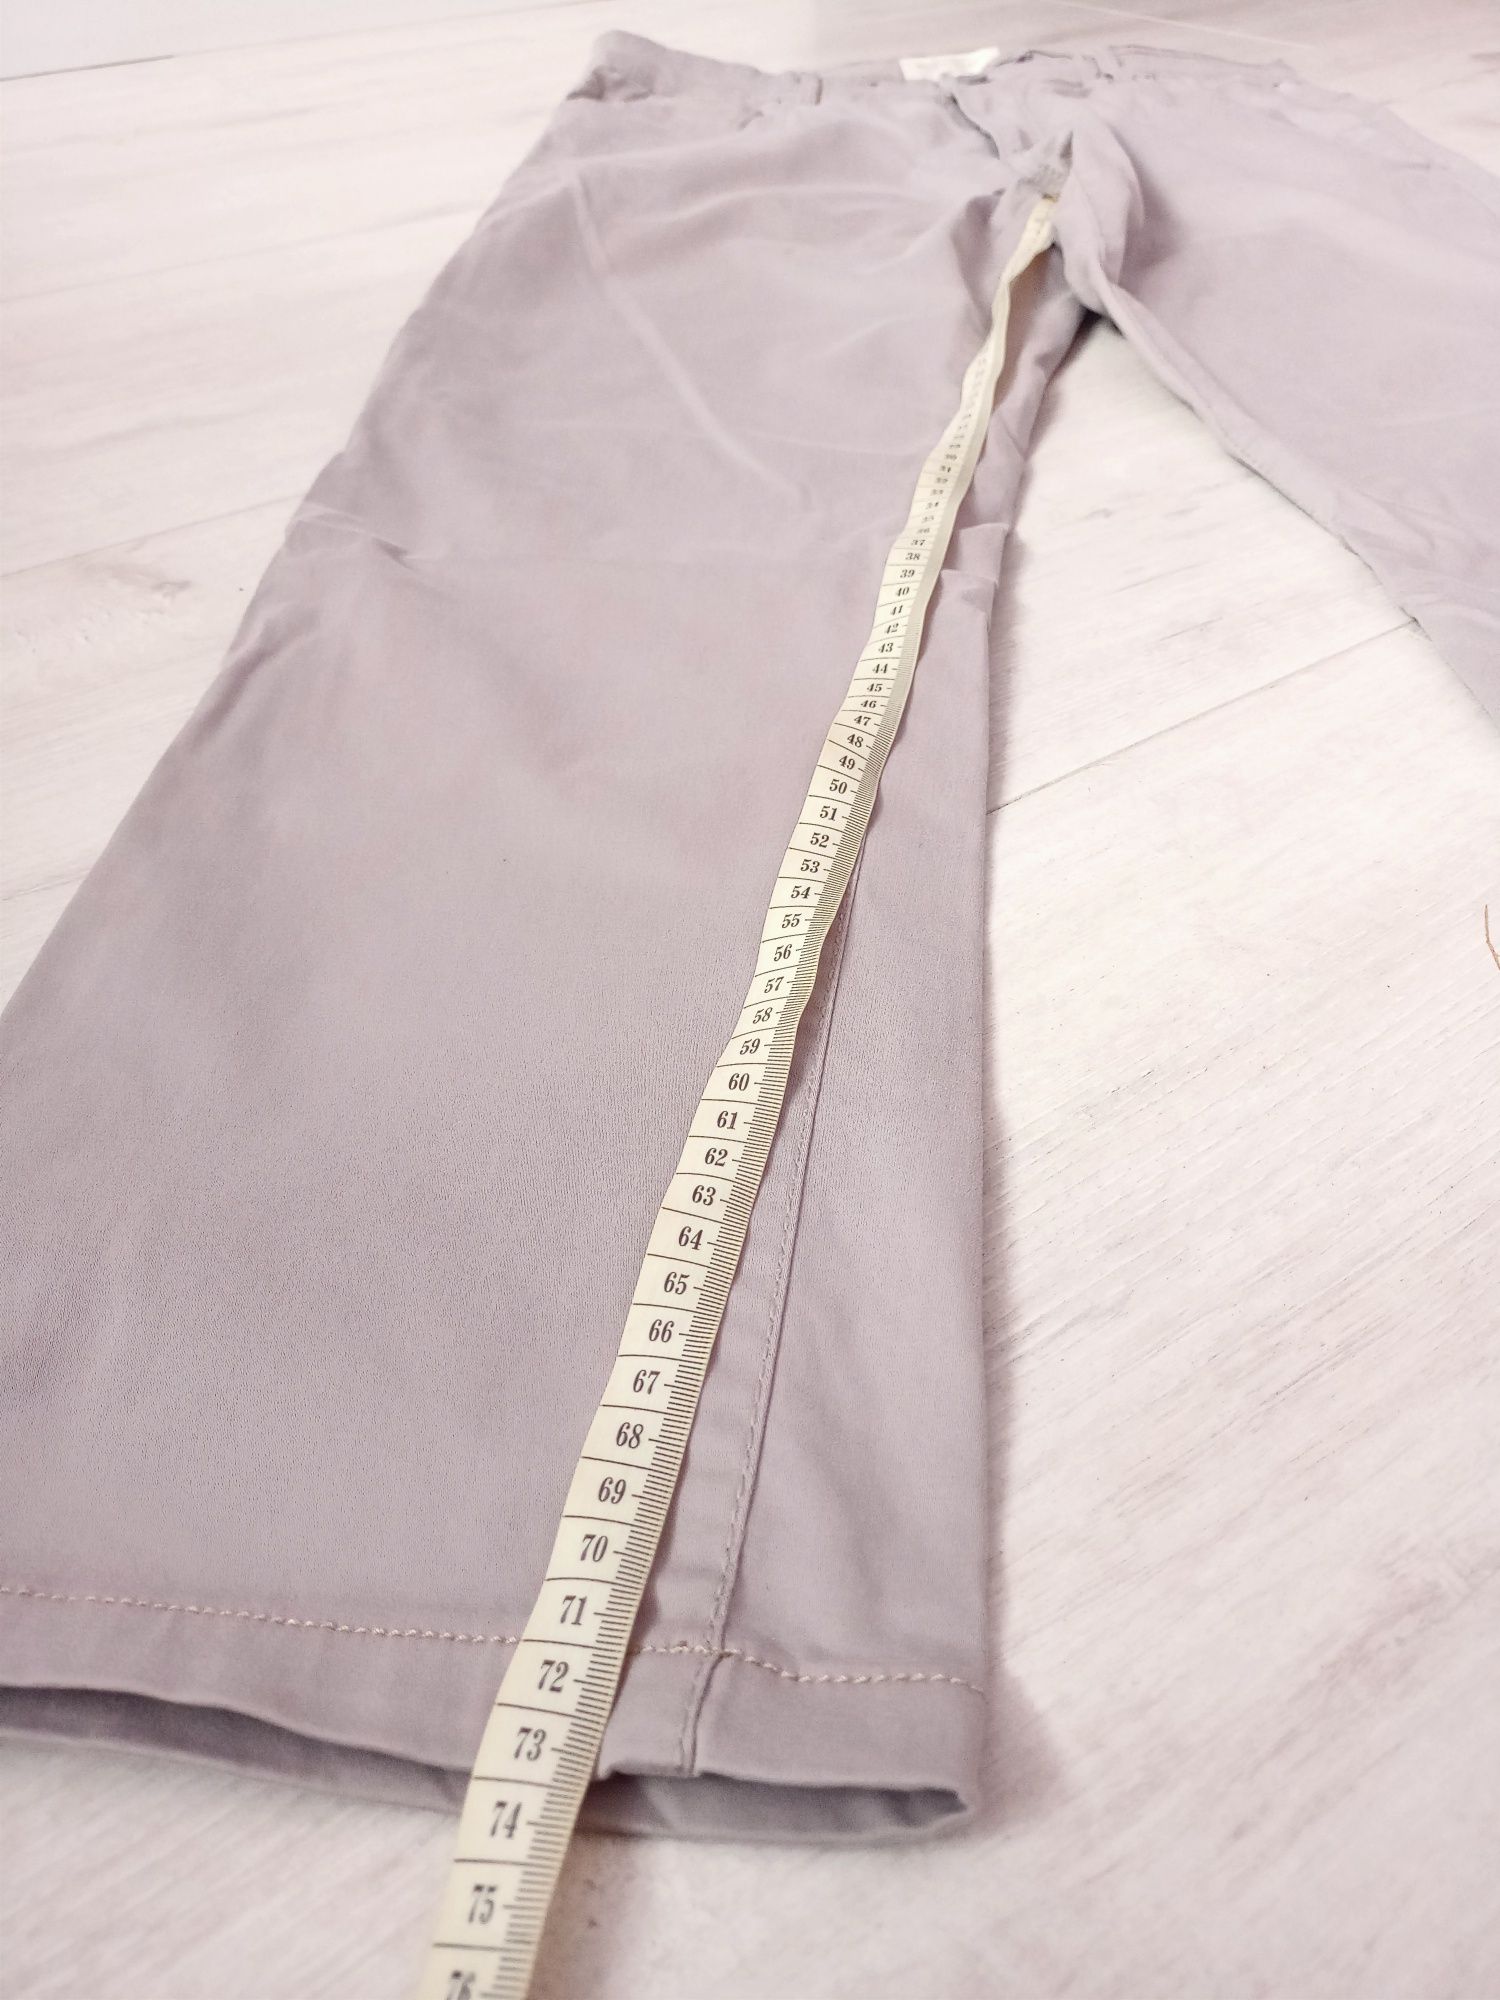 Spodnie męskie W36 L Reserved kolor jasno szary eleganckie chinosy